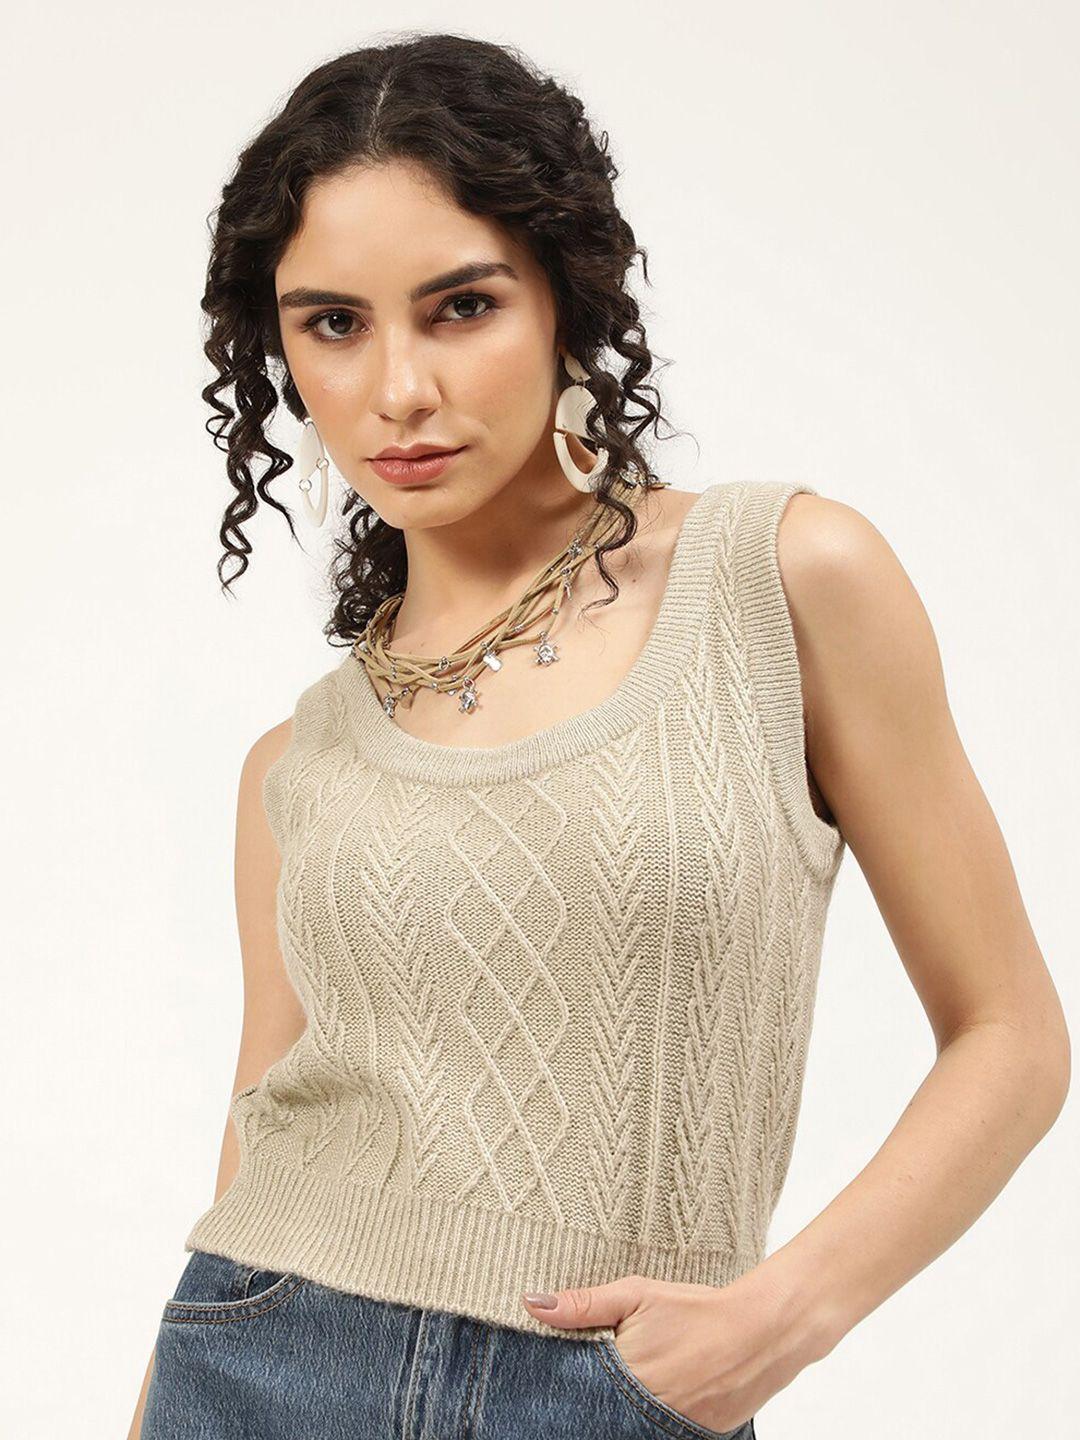 centrestage-women-cream-coloured-cable-knit-sweater-vest